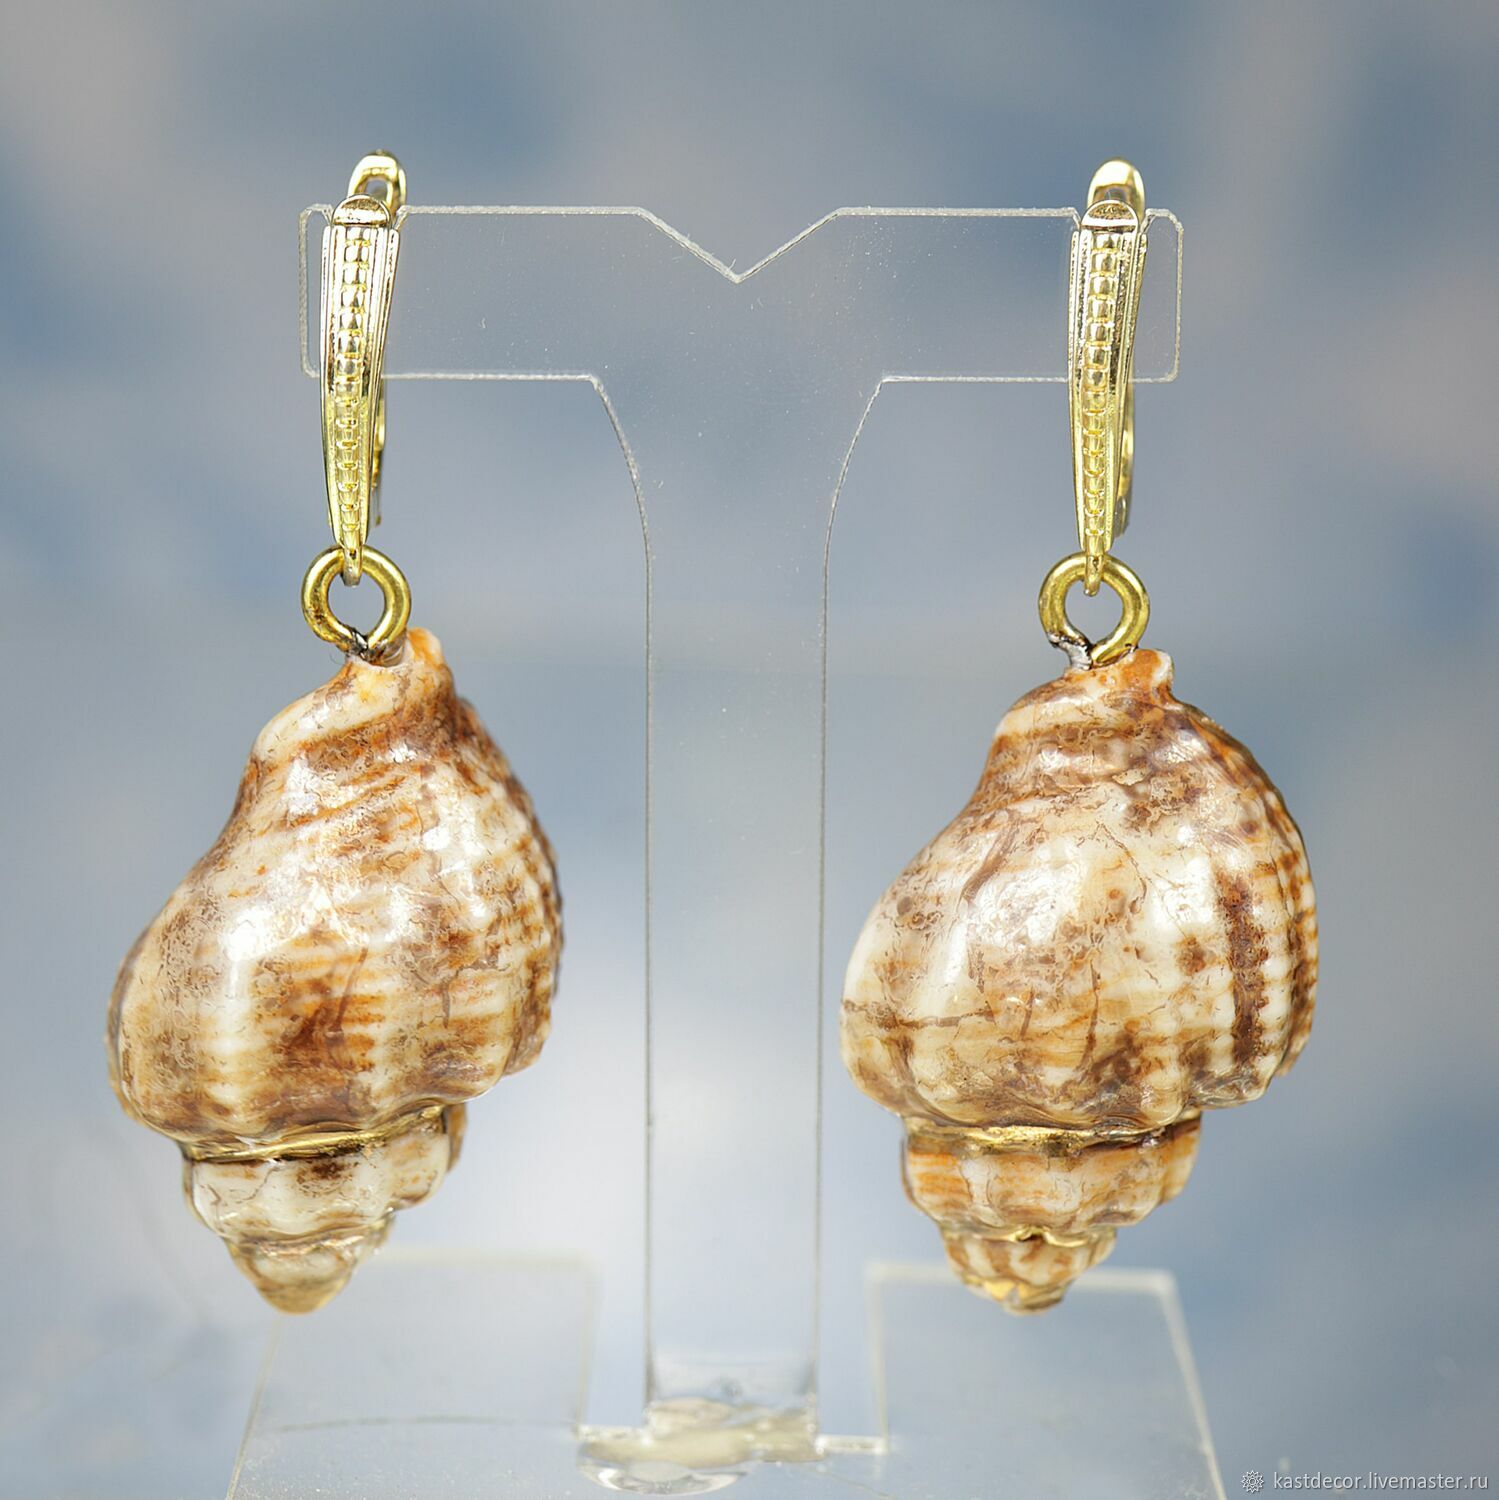 Porcelain earrings with an English lock 'Marine', Earrings, Moscow,  Фото №1